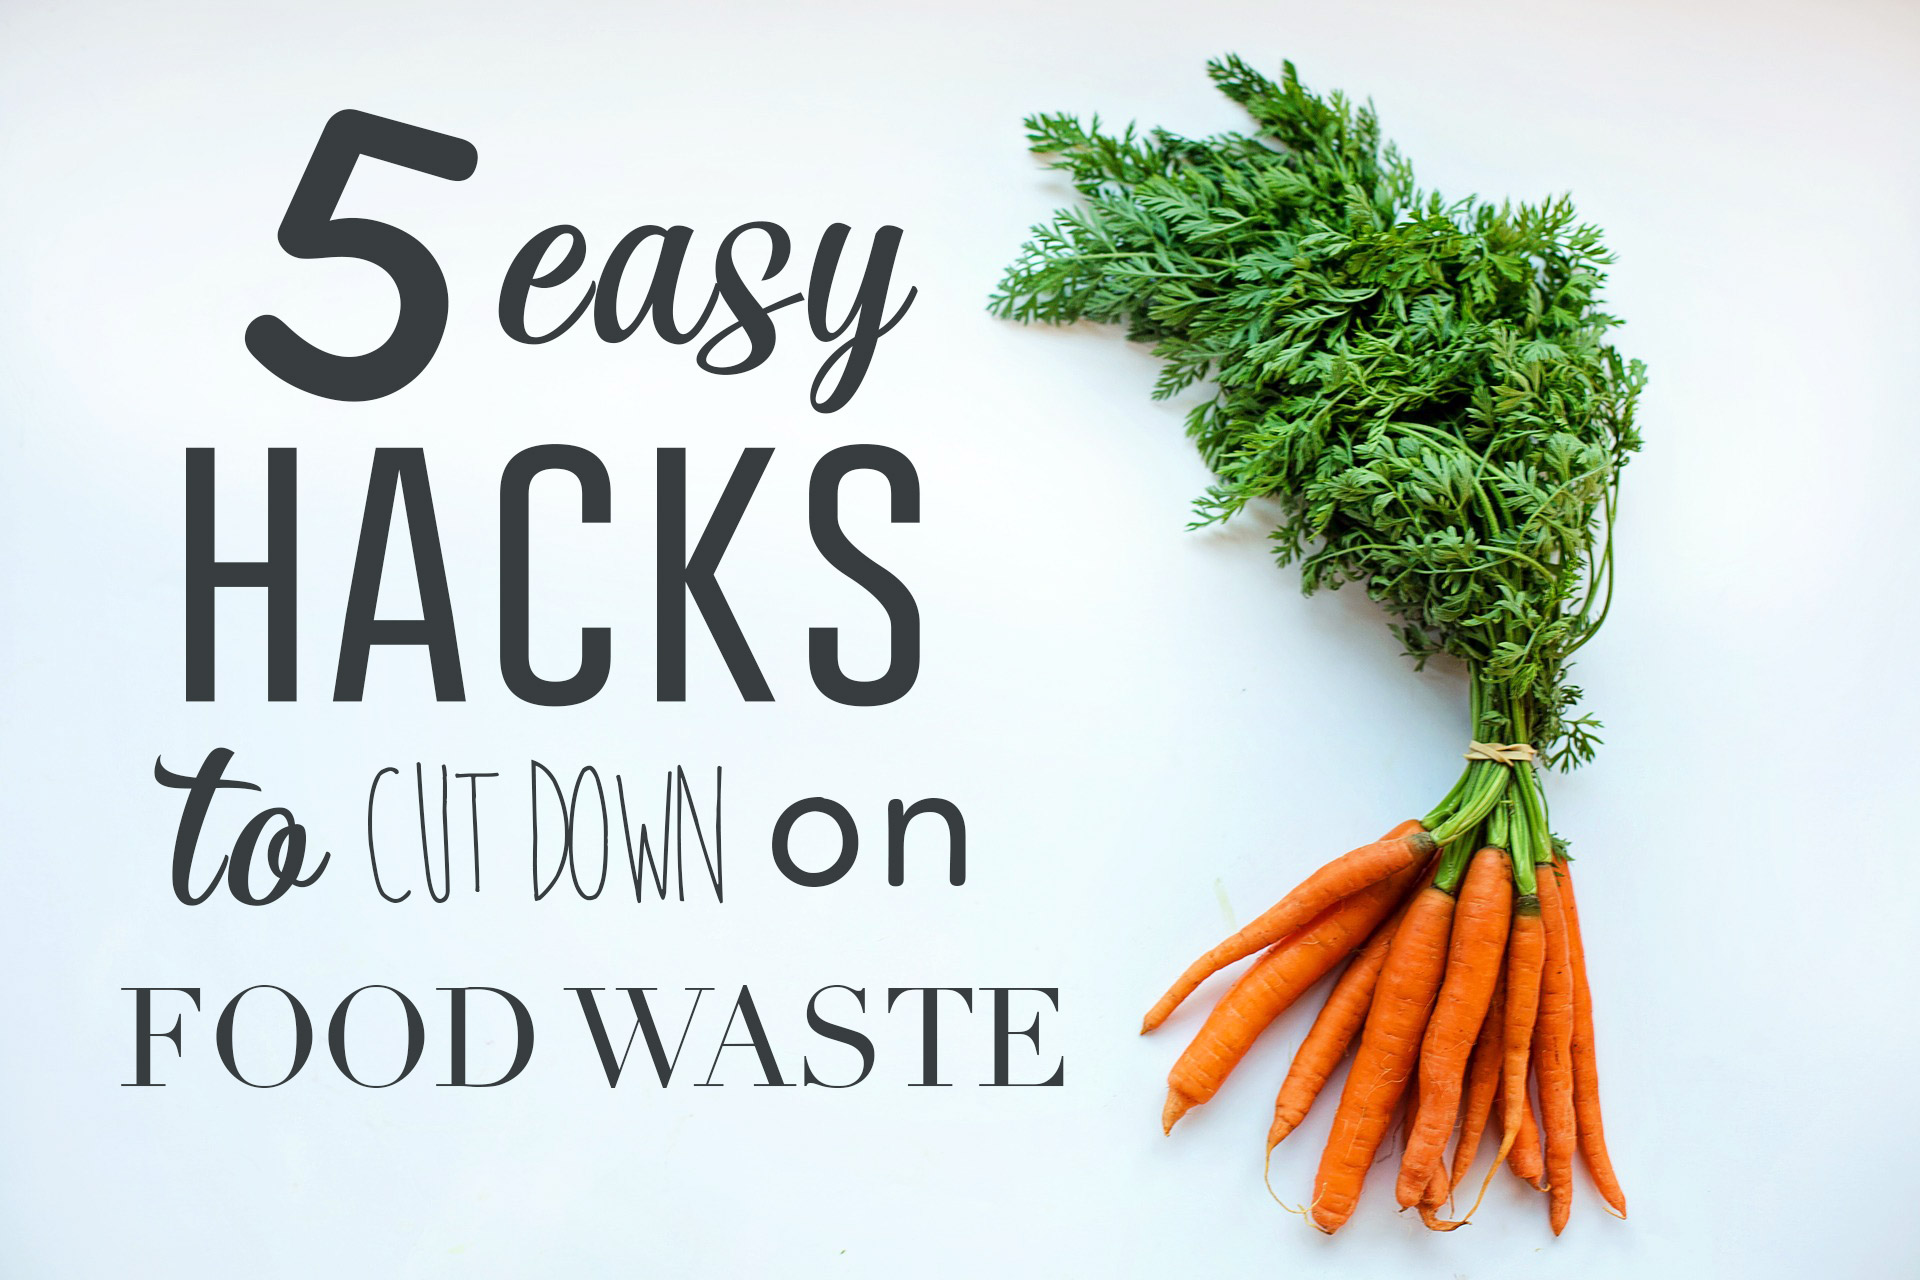 5 Easy Hacks to Cut Down on Food Waste